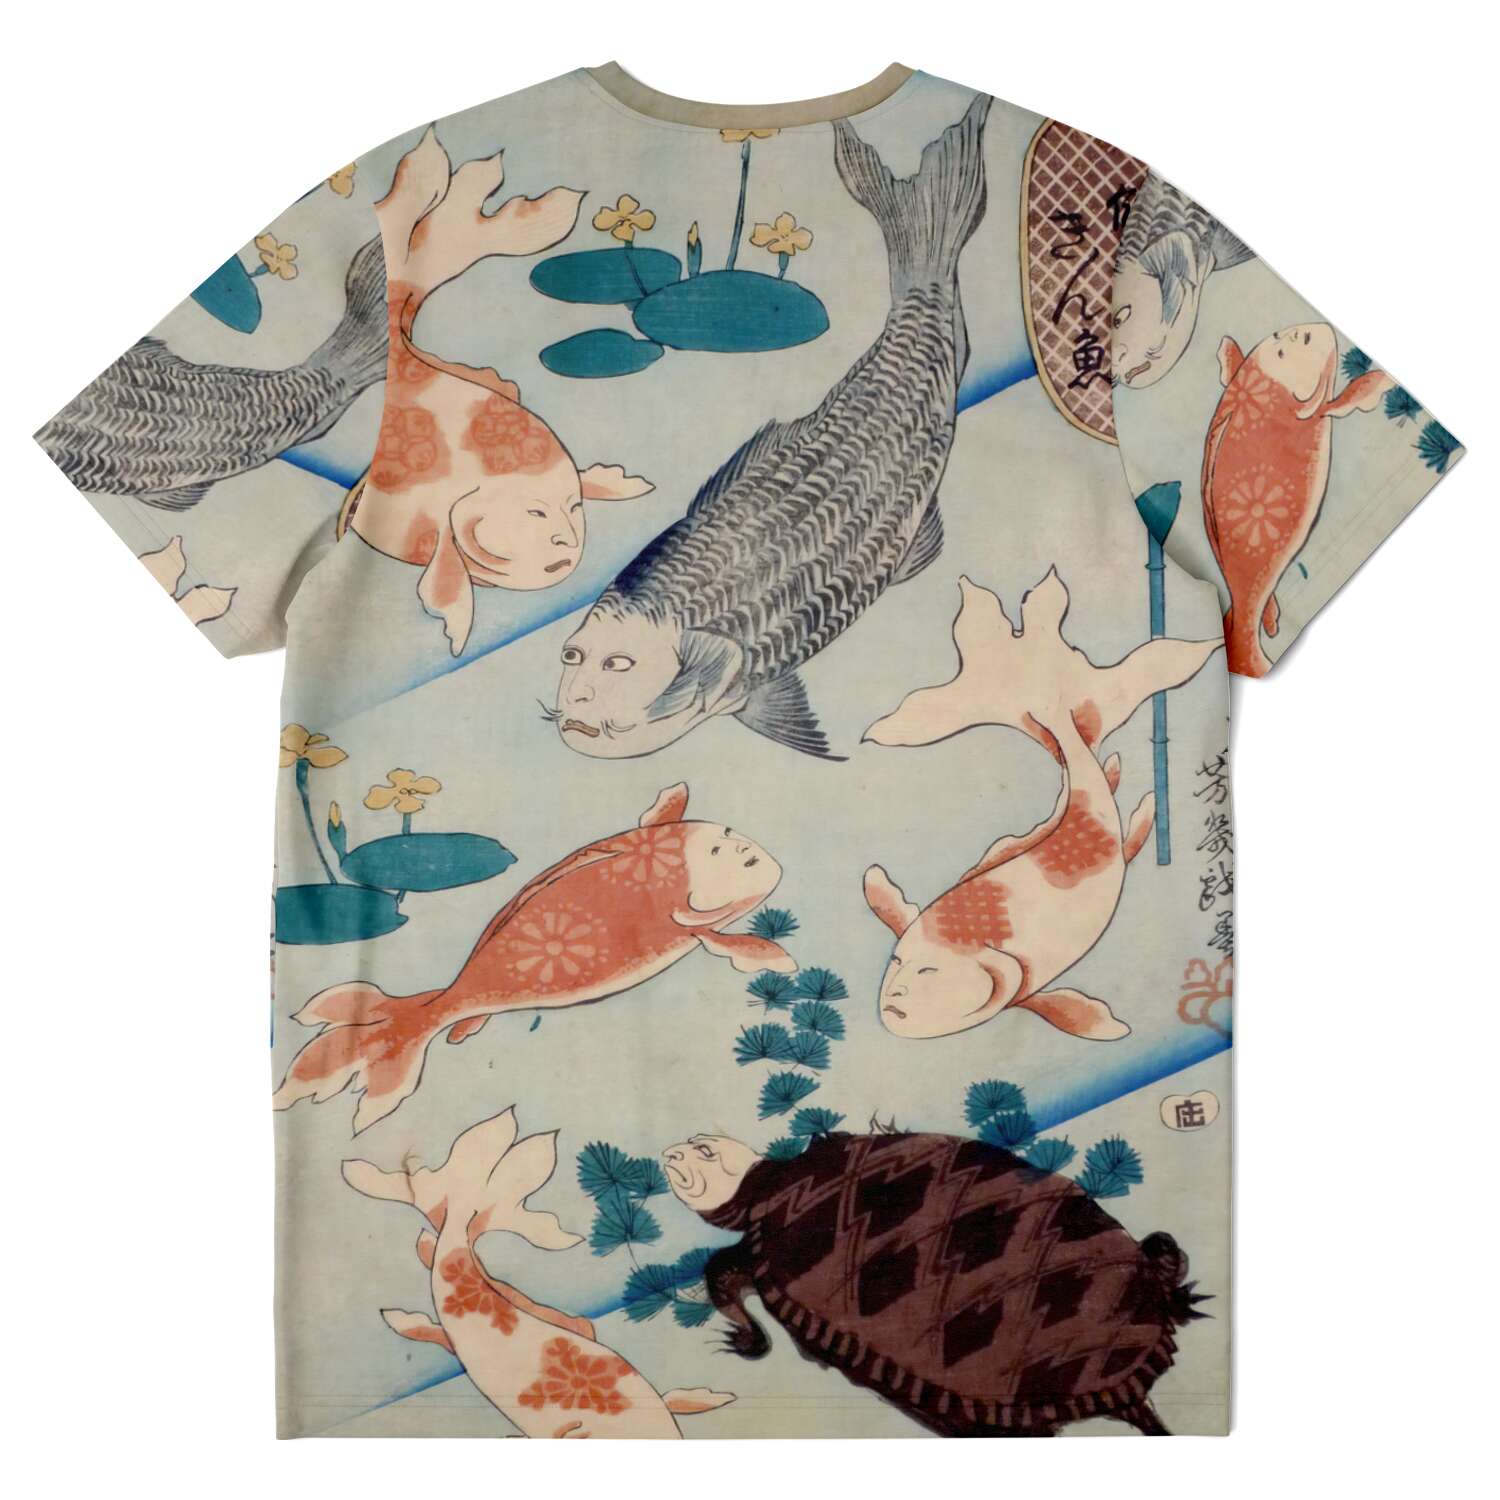 T-shirt XS A Parody of Goldfish with Actors' Expressions (Utagawa Yoshiiku) Cute Kawaii Ukiyo-e Woodblock Print T-Shirt Tee